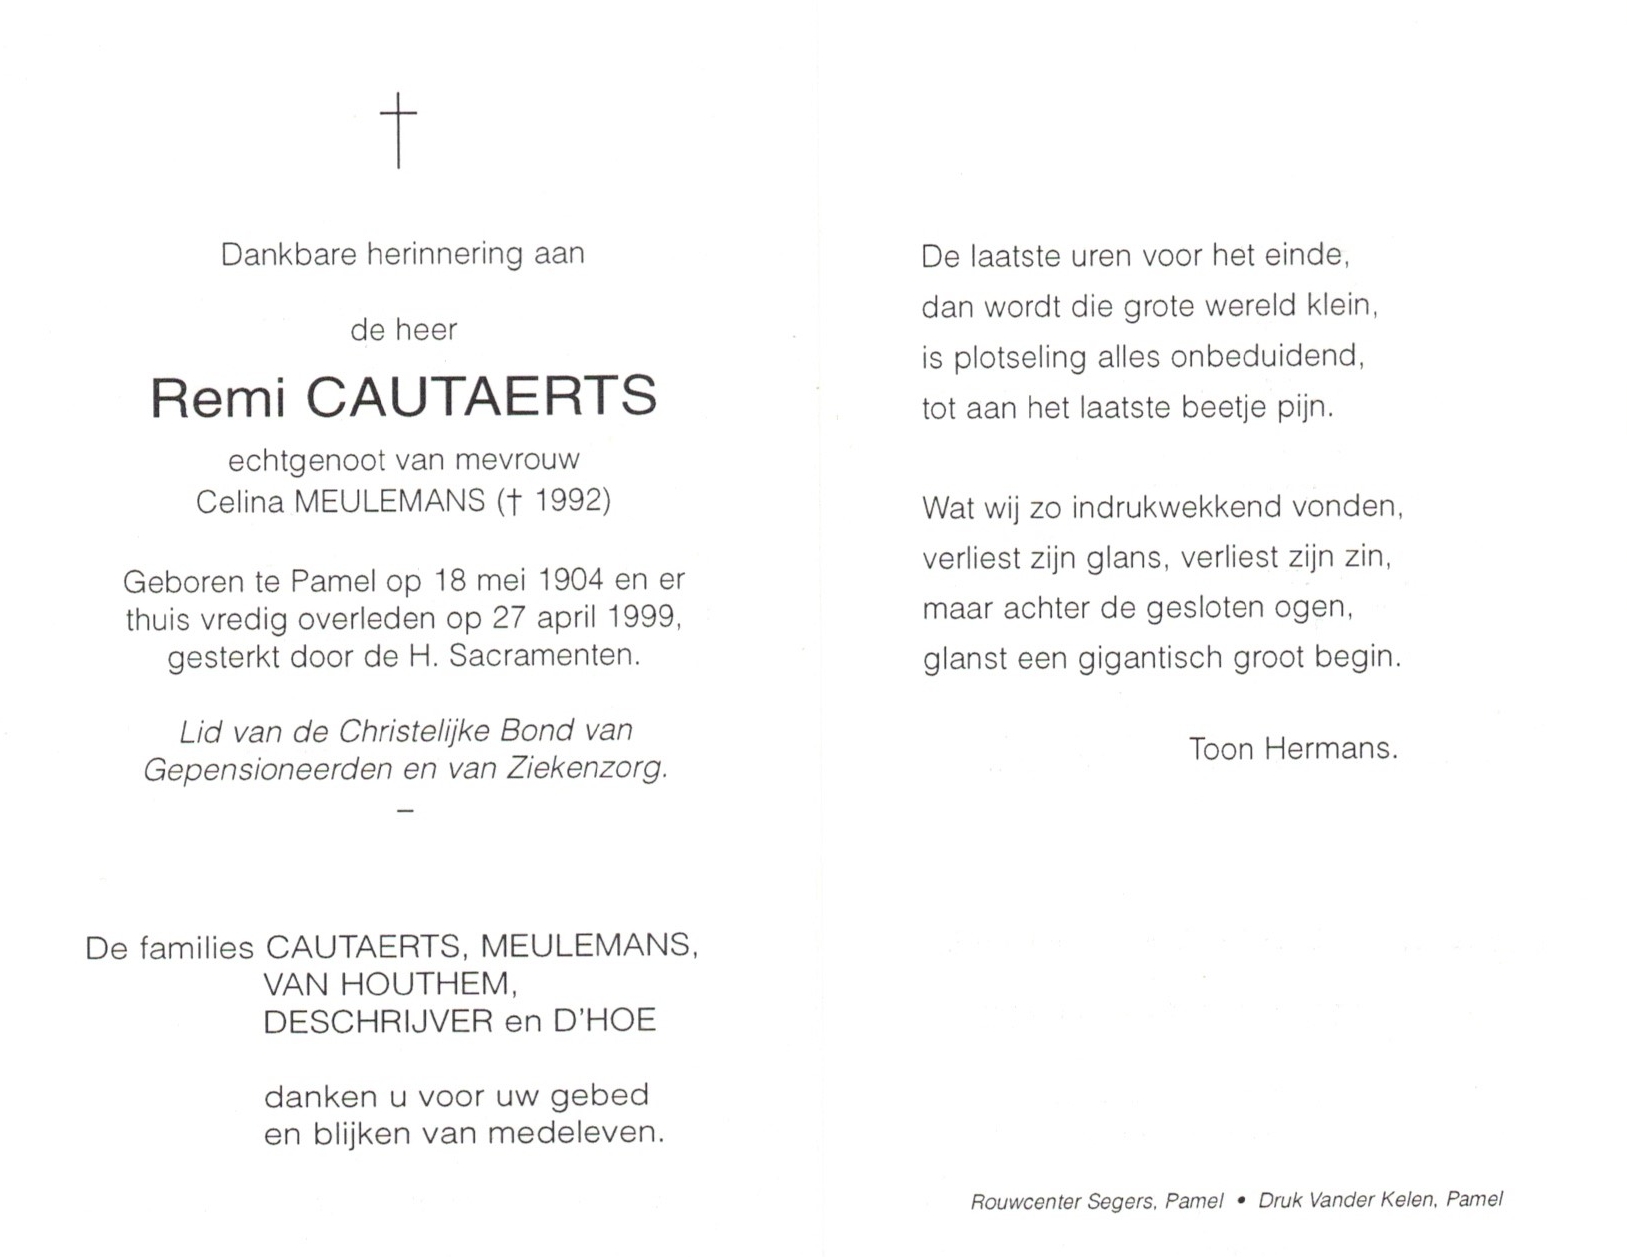 Cautaerts Remi